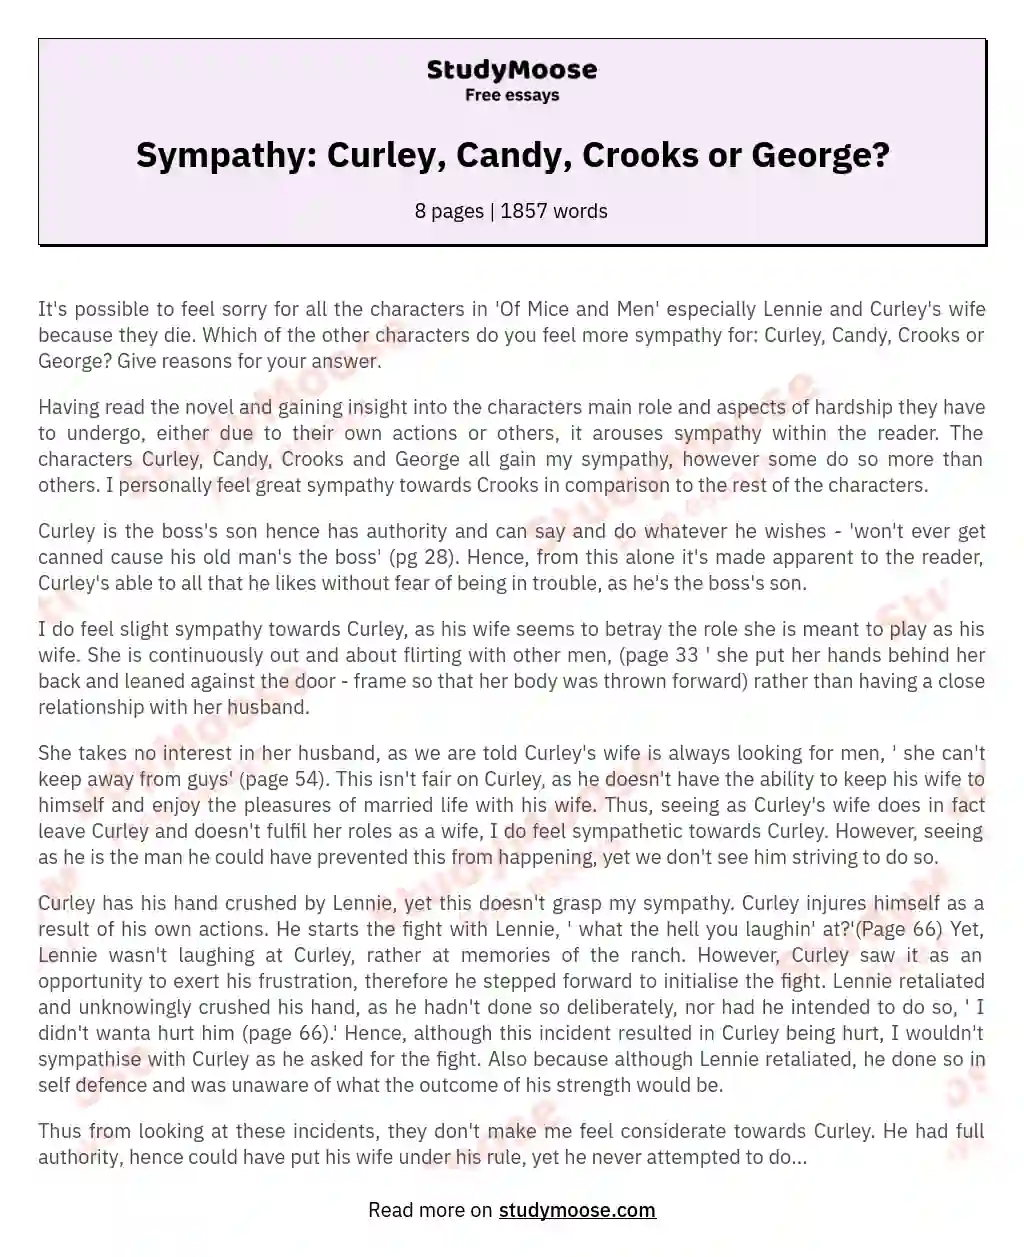 Sympathy: Curley, Candy, Crooks or George? essay